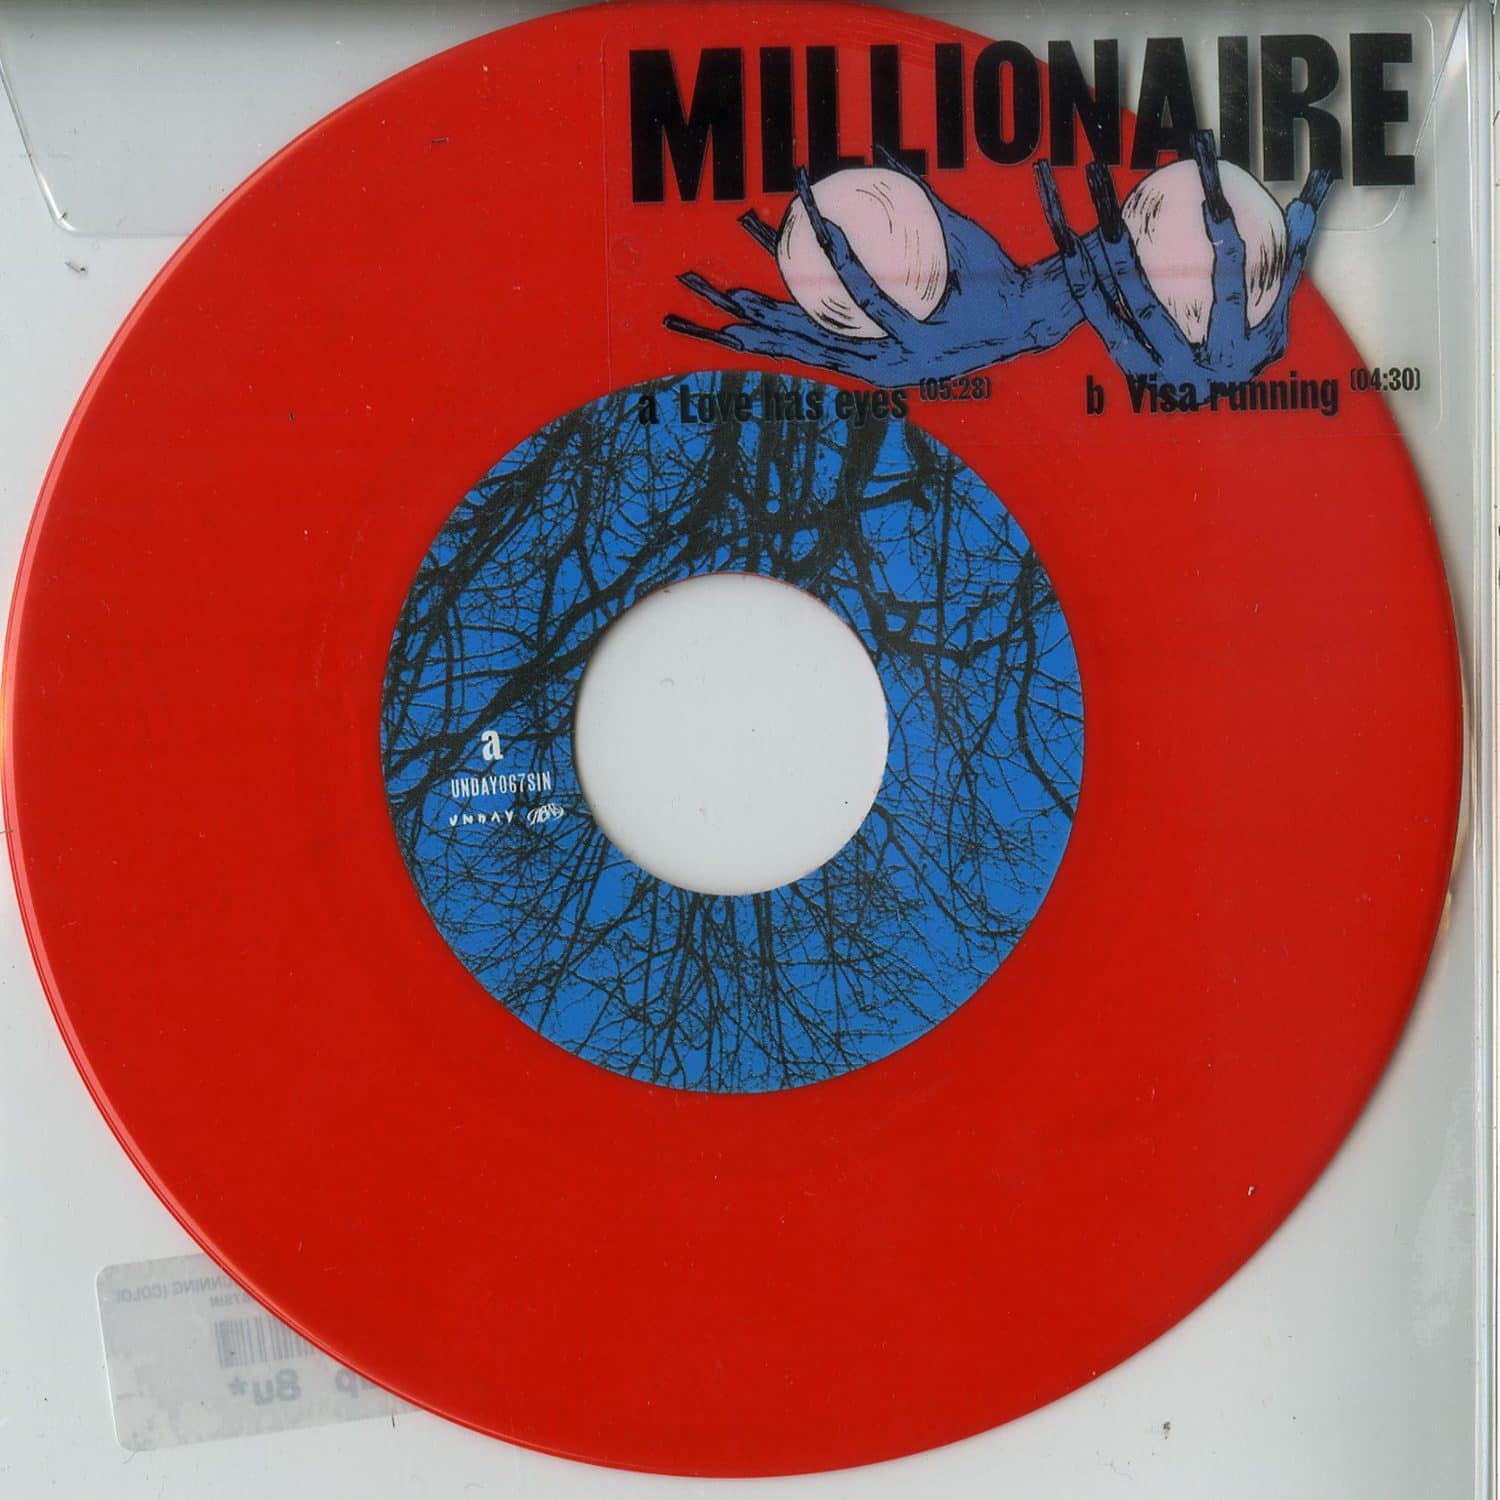 Millionaire - LOVE HAS EYES / VISA RUNNING 